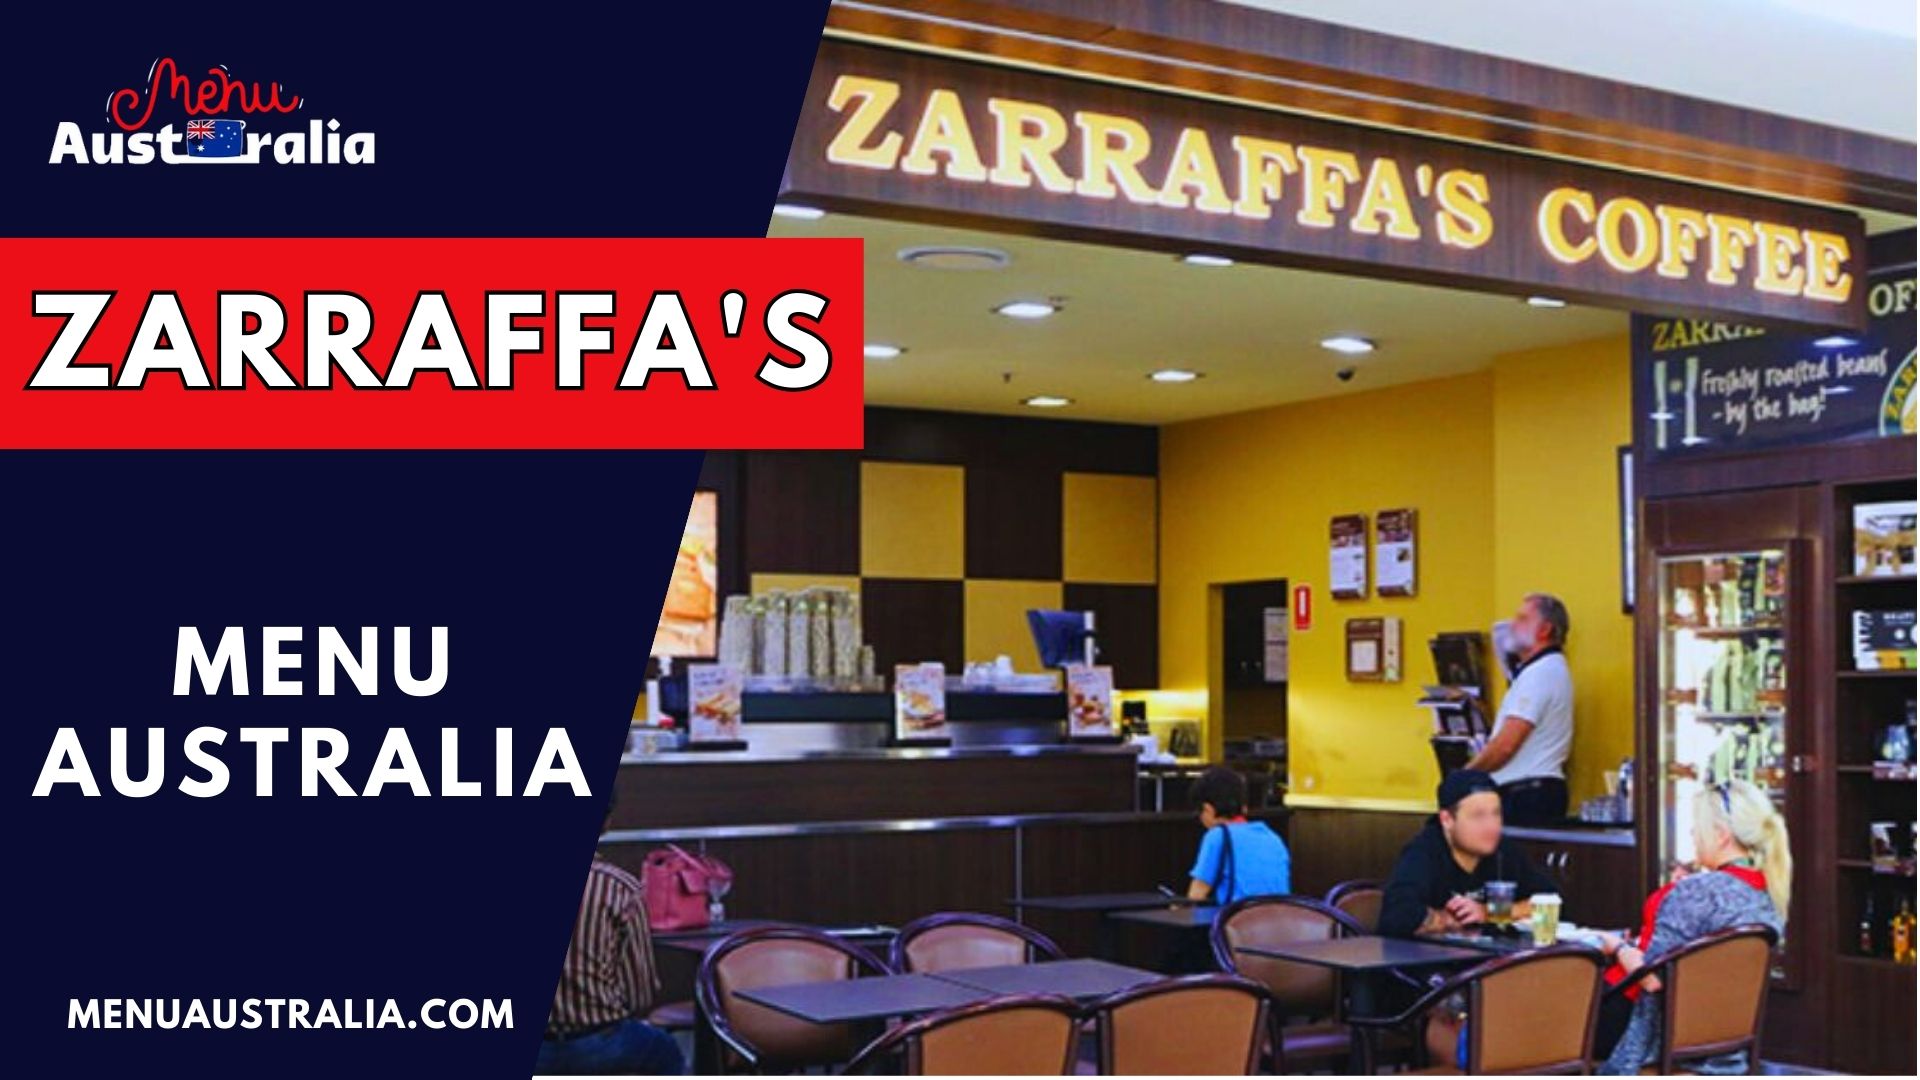 Zarraffa's Menu Australia